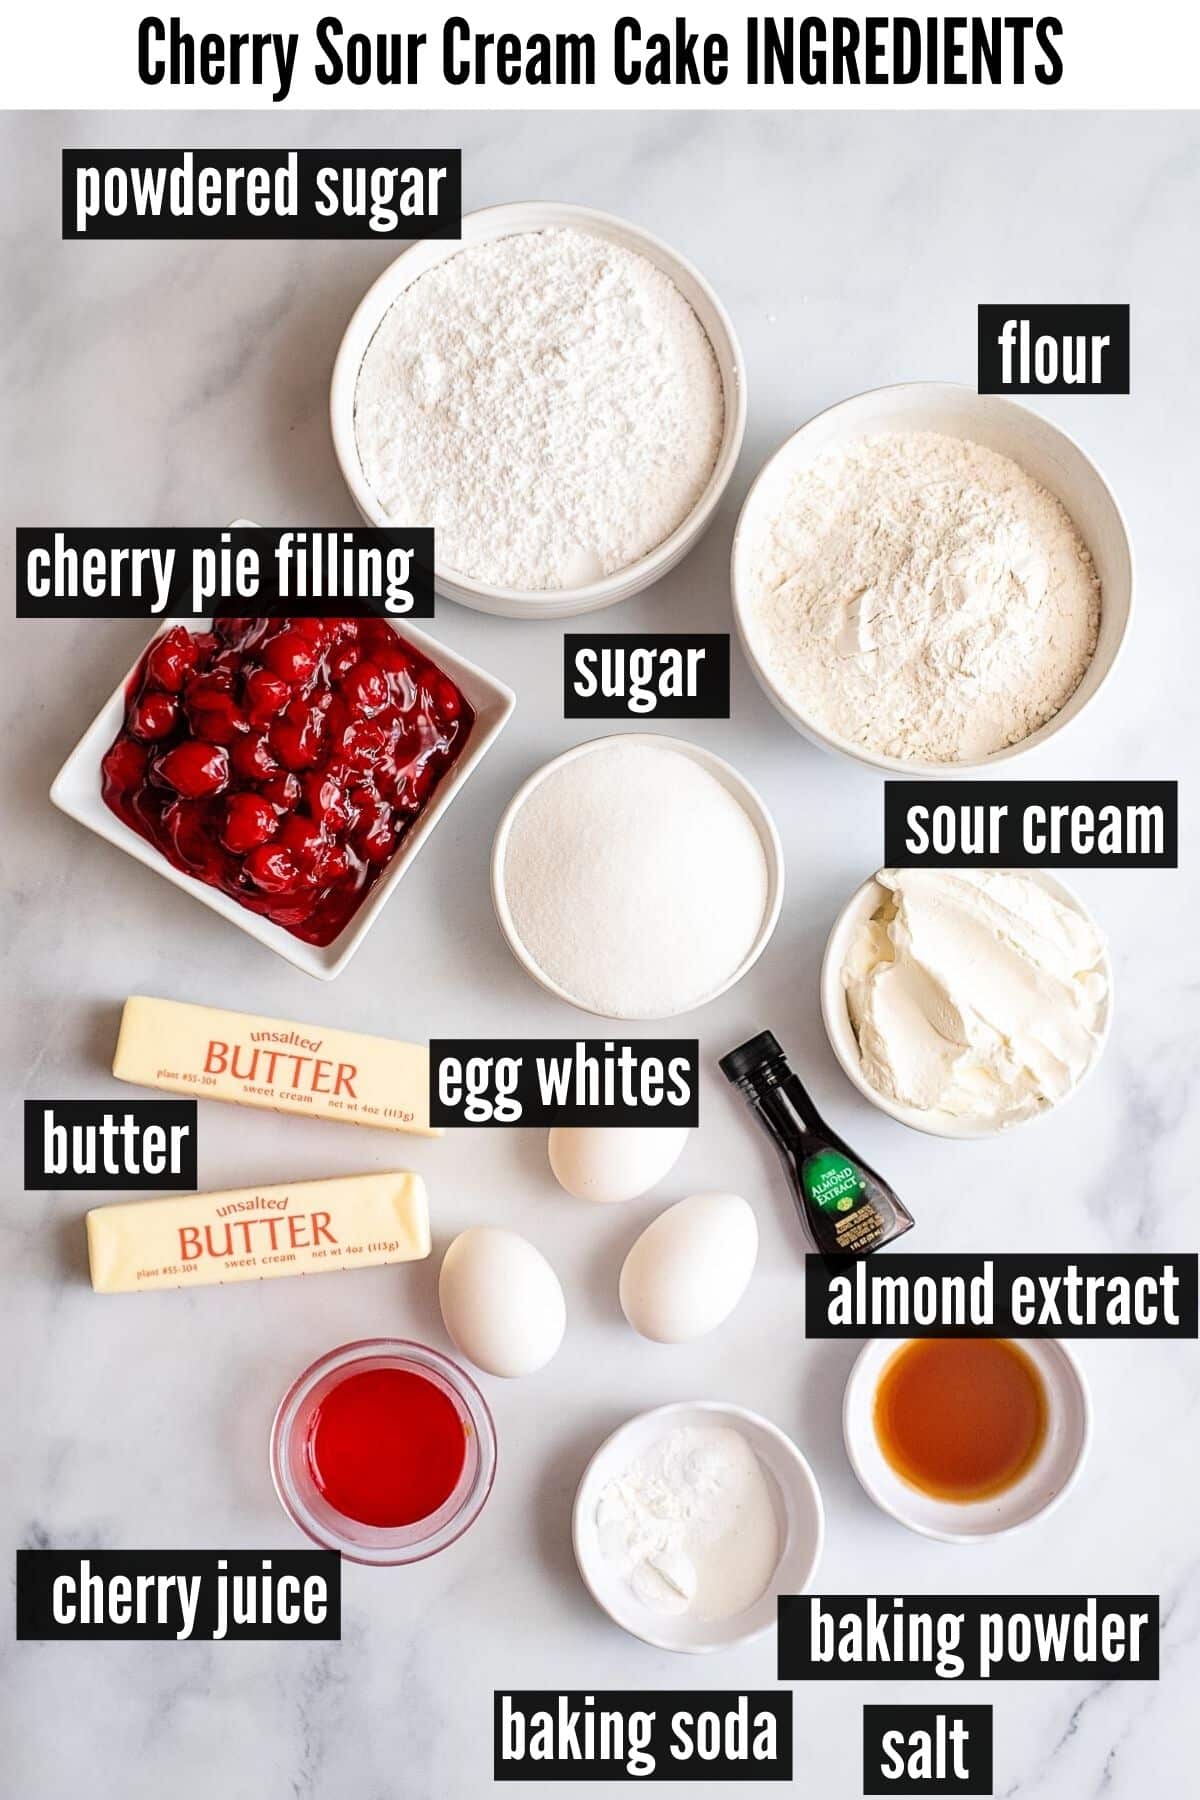 cherry sour cream cake ingredients labelled